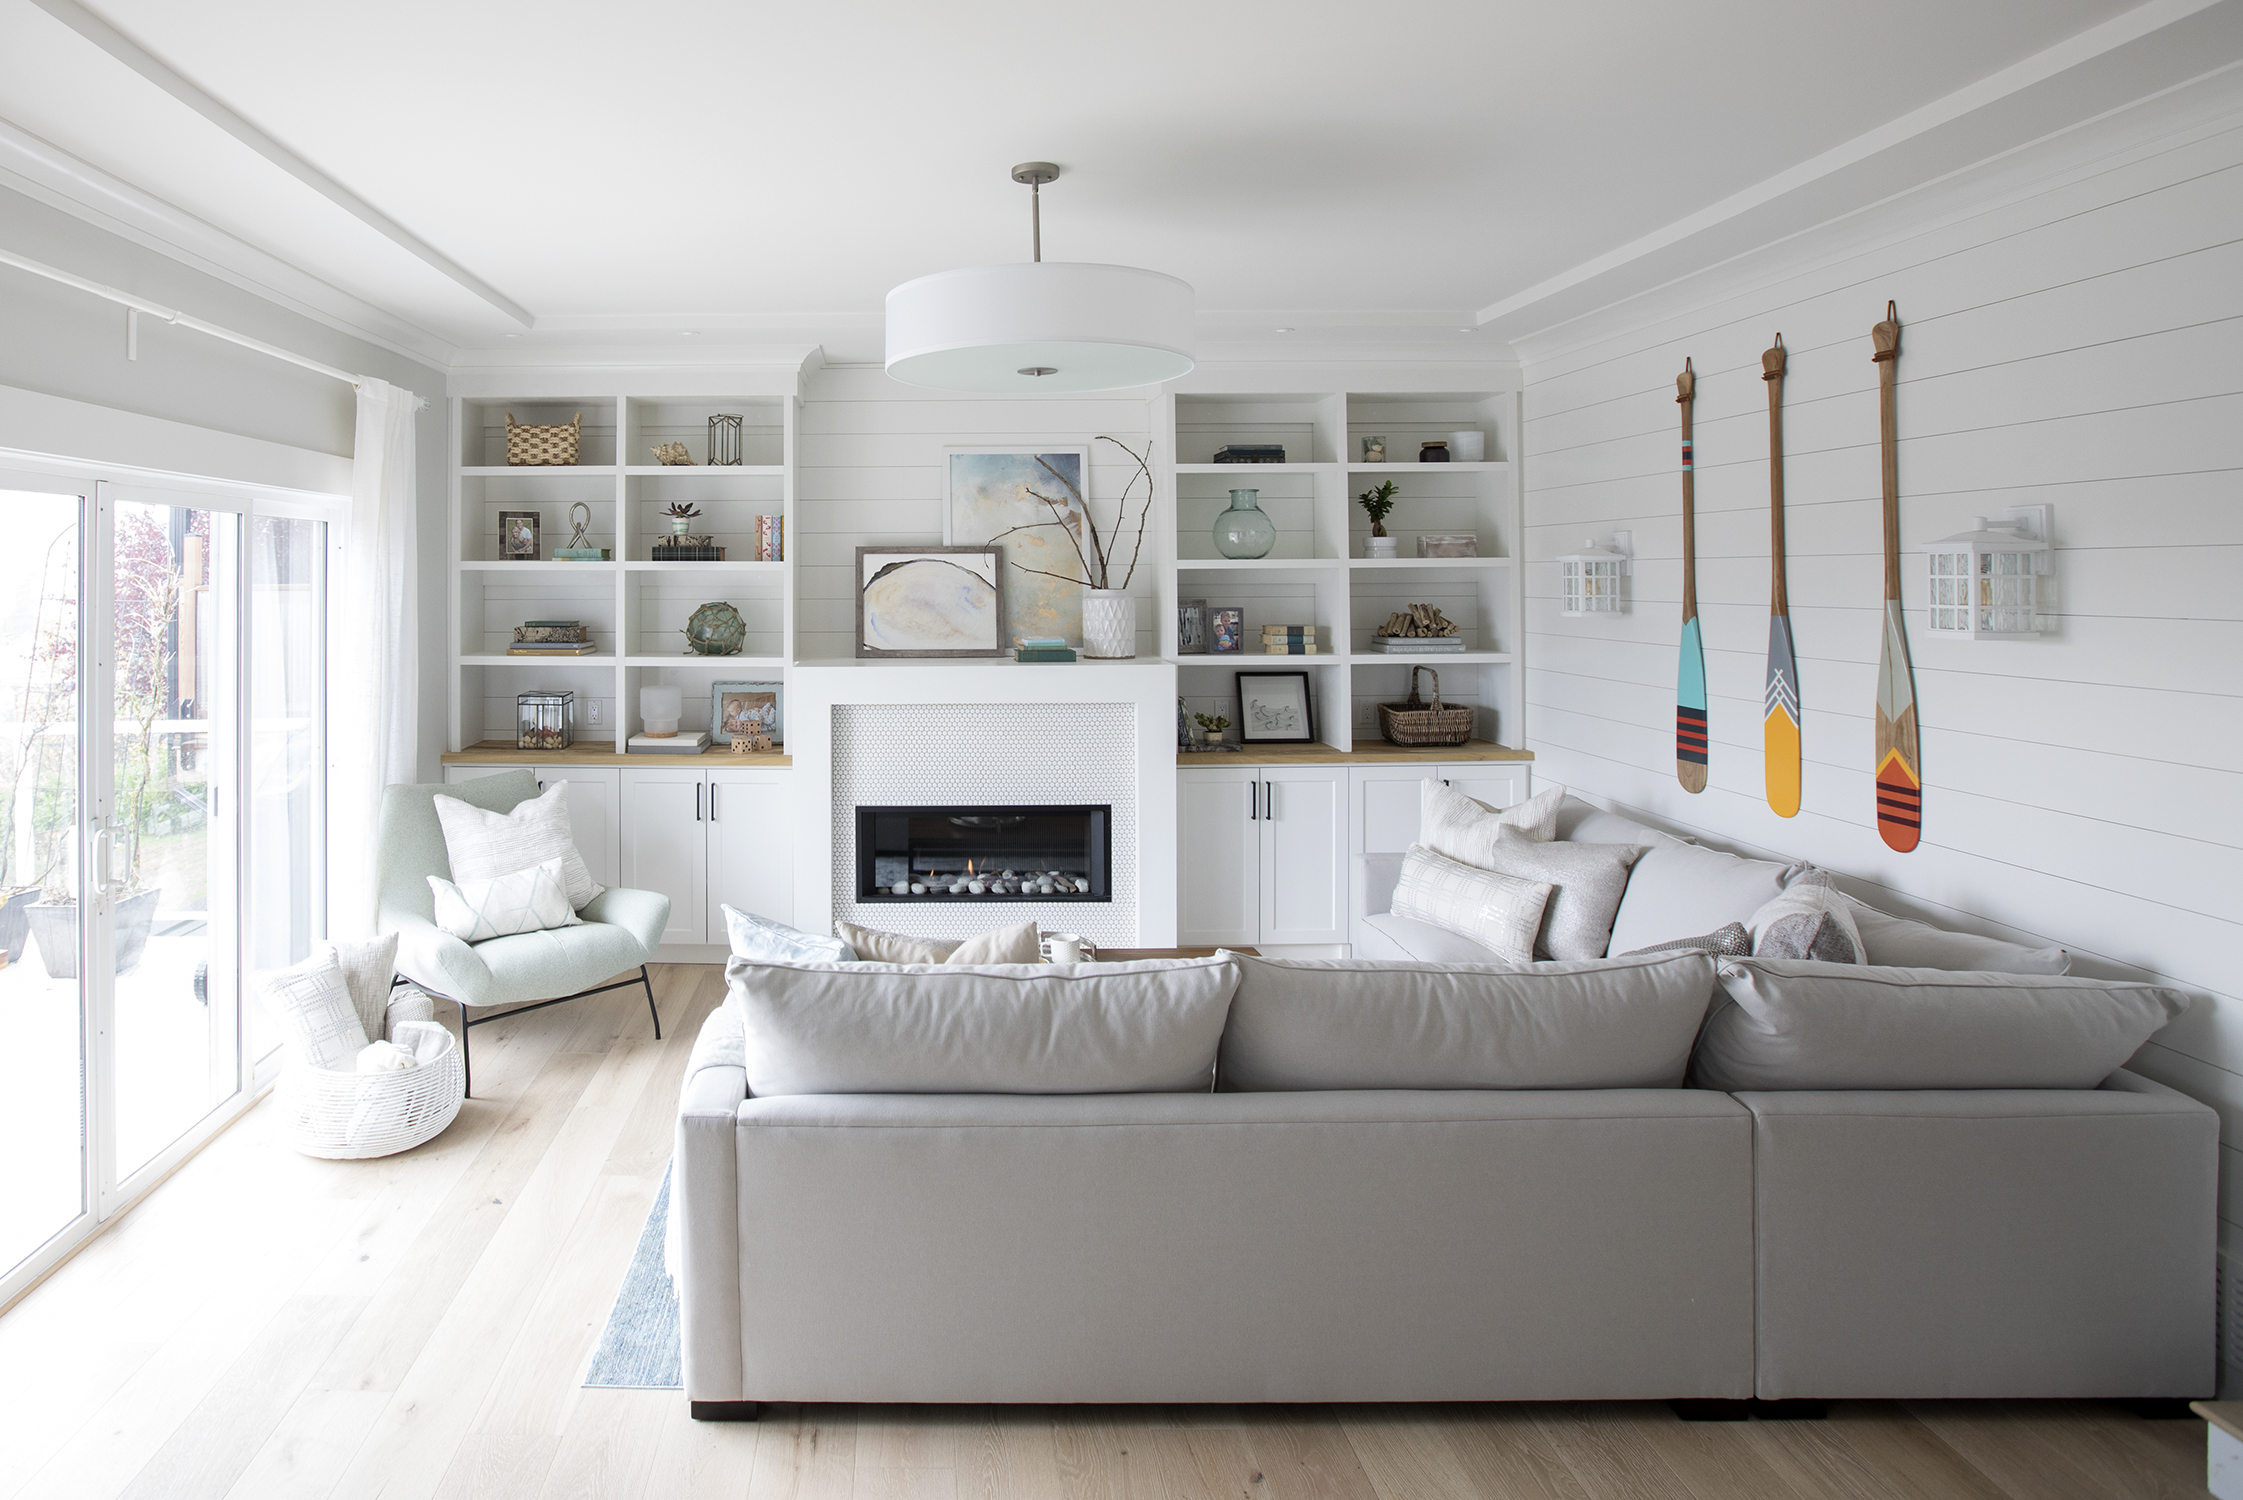 Jillian Harris creates a chic and cozy family home.